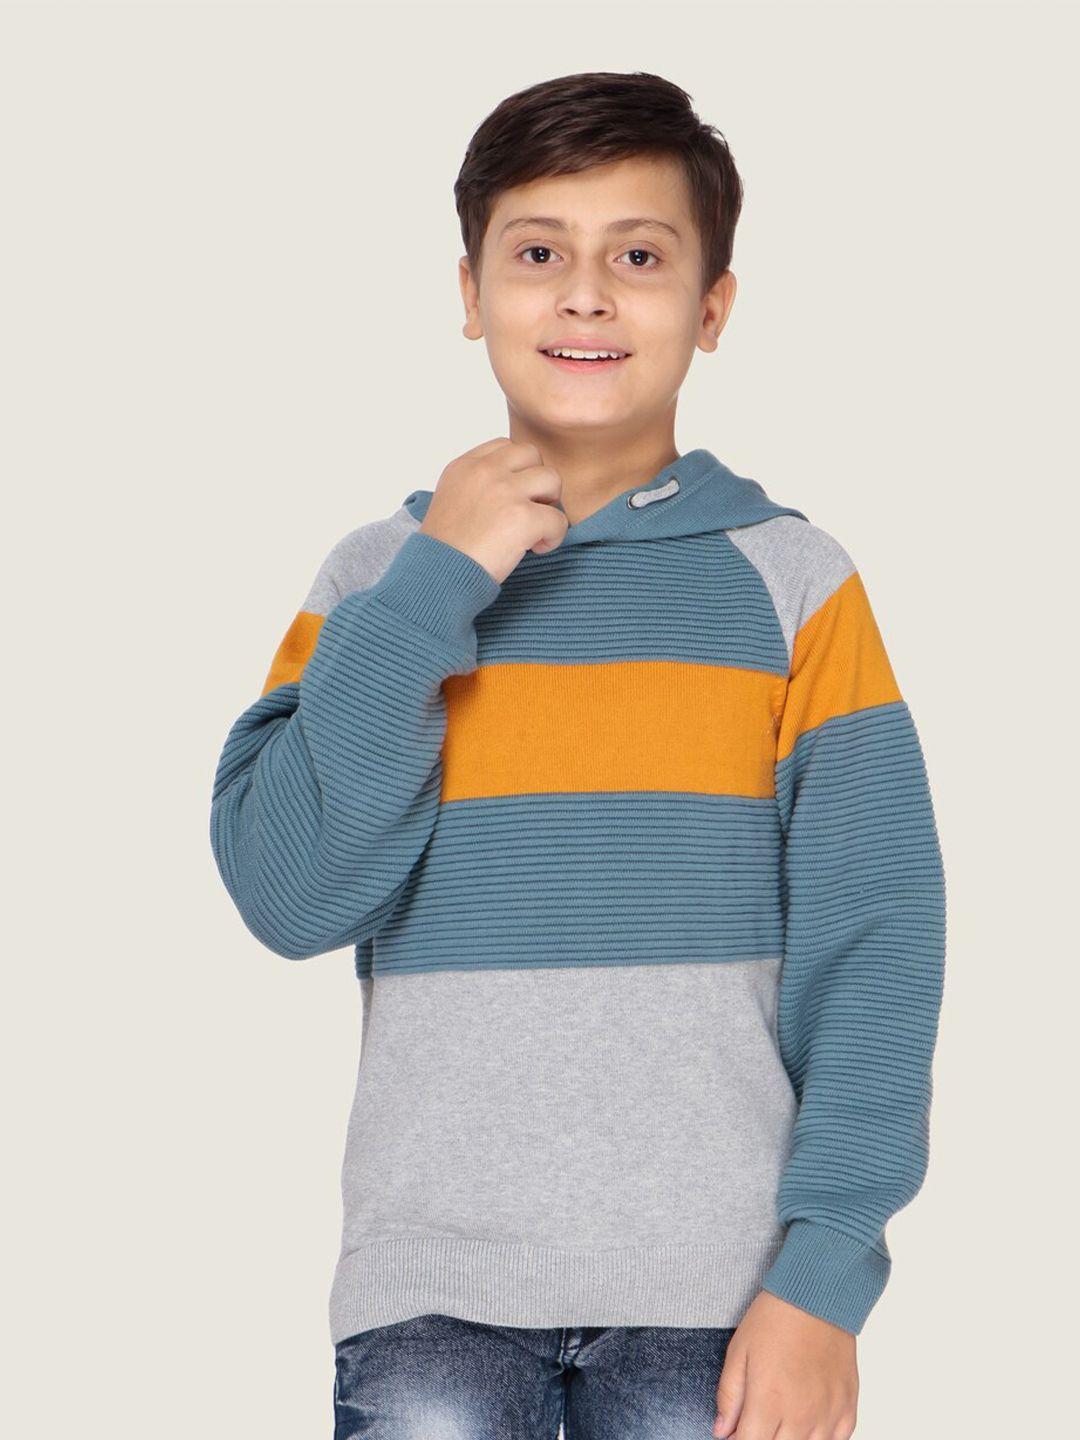 lasnak boys grey & orange striped cotton pullover sweater